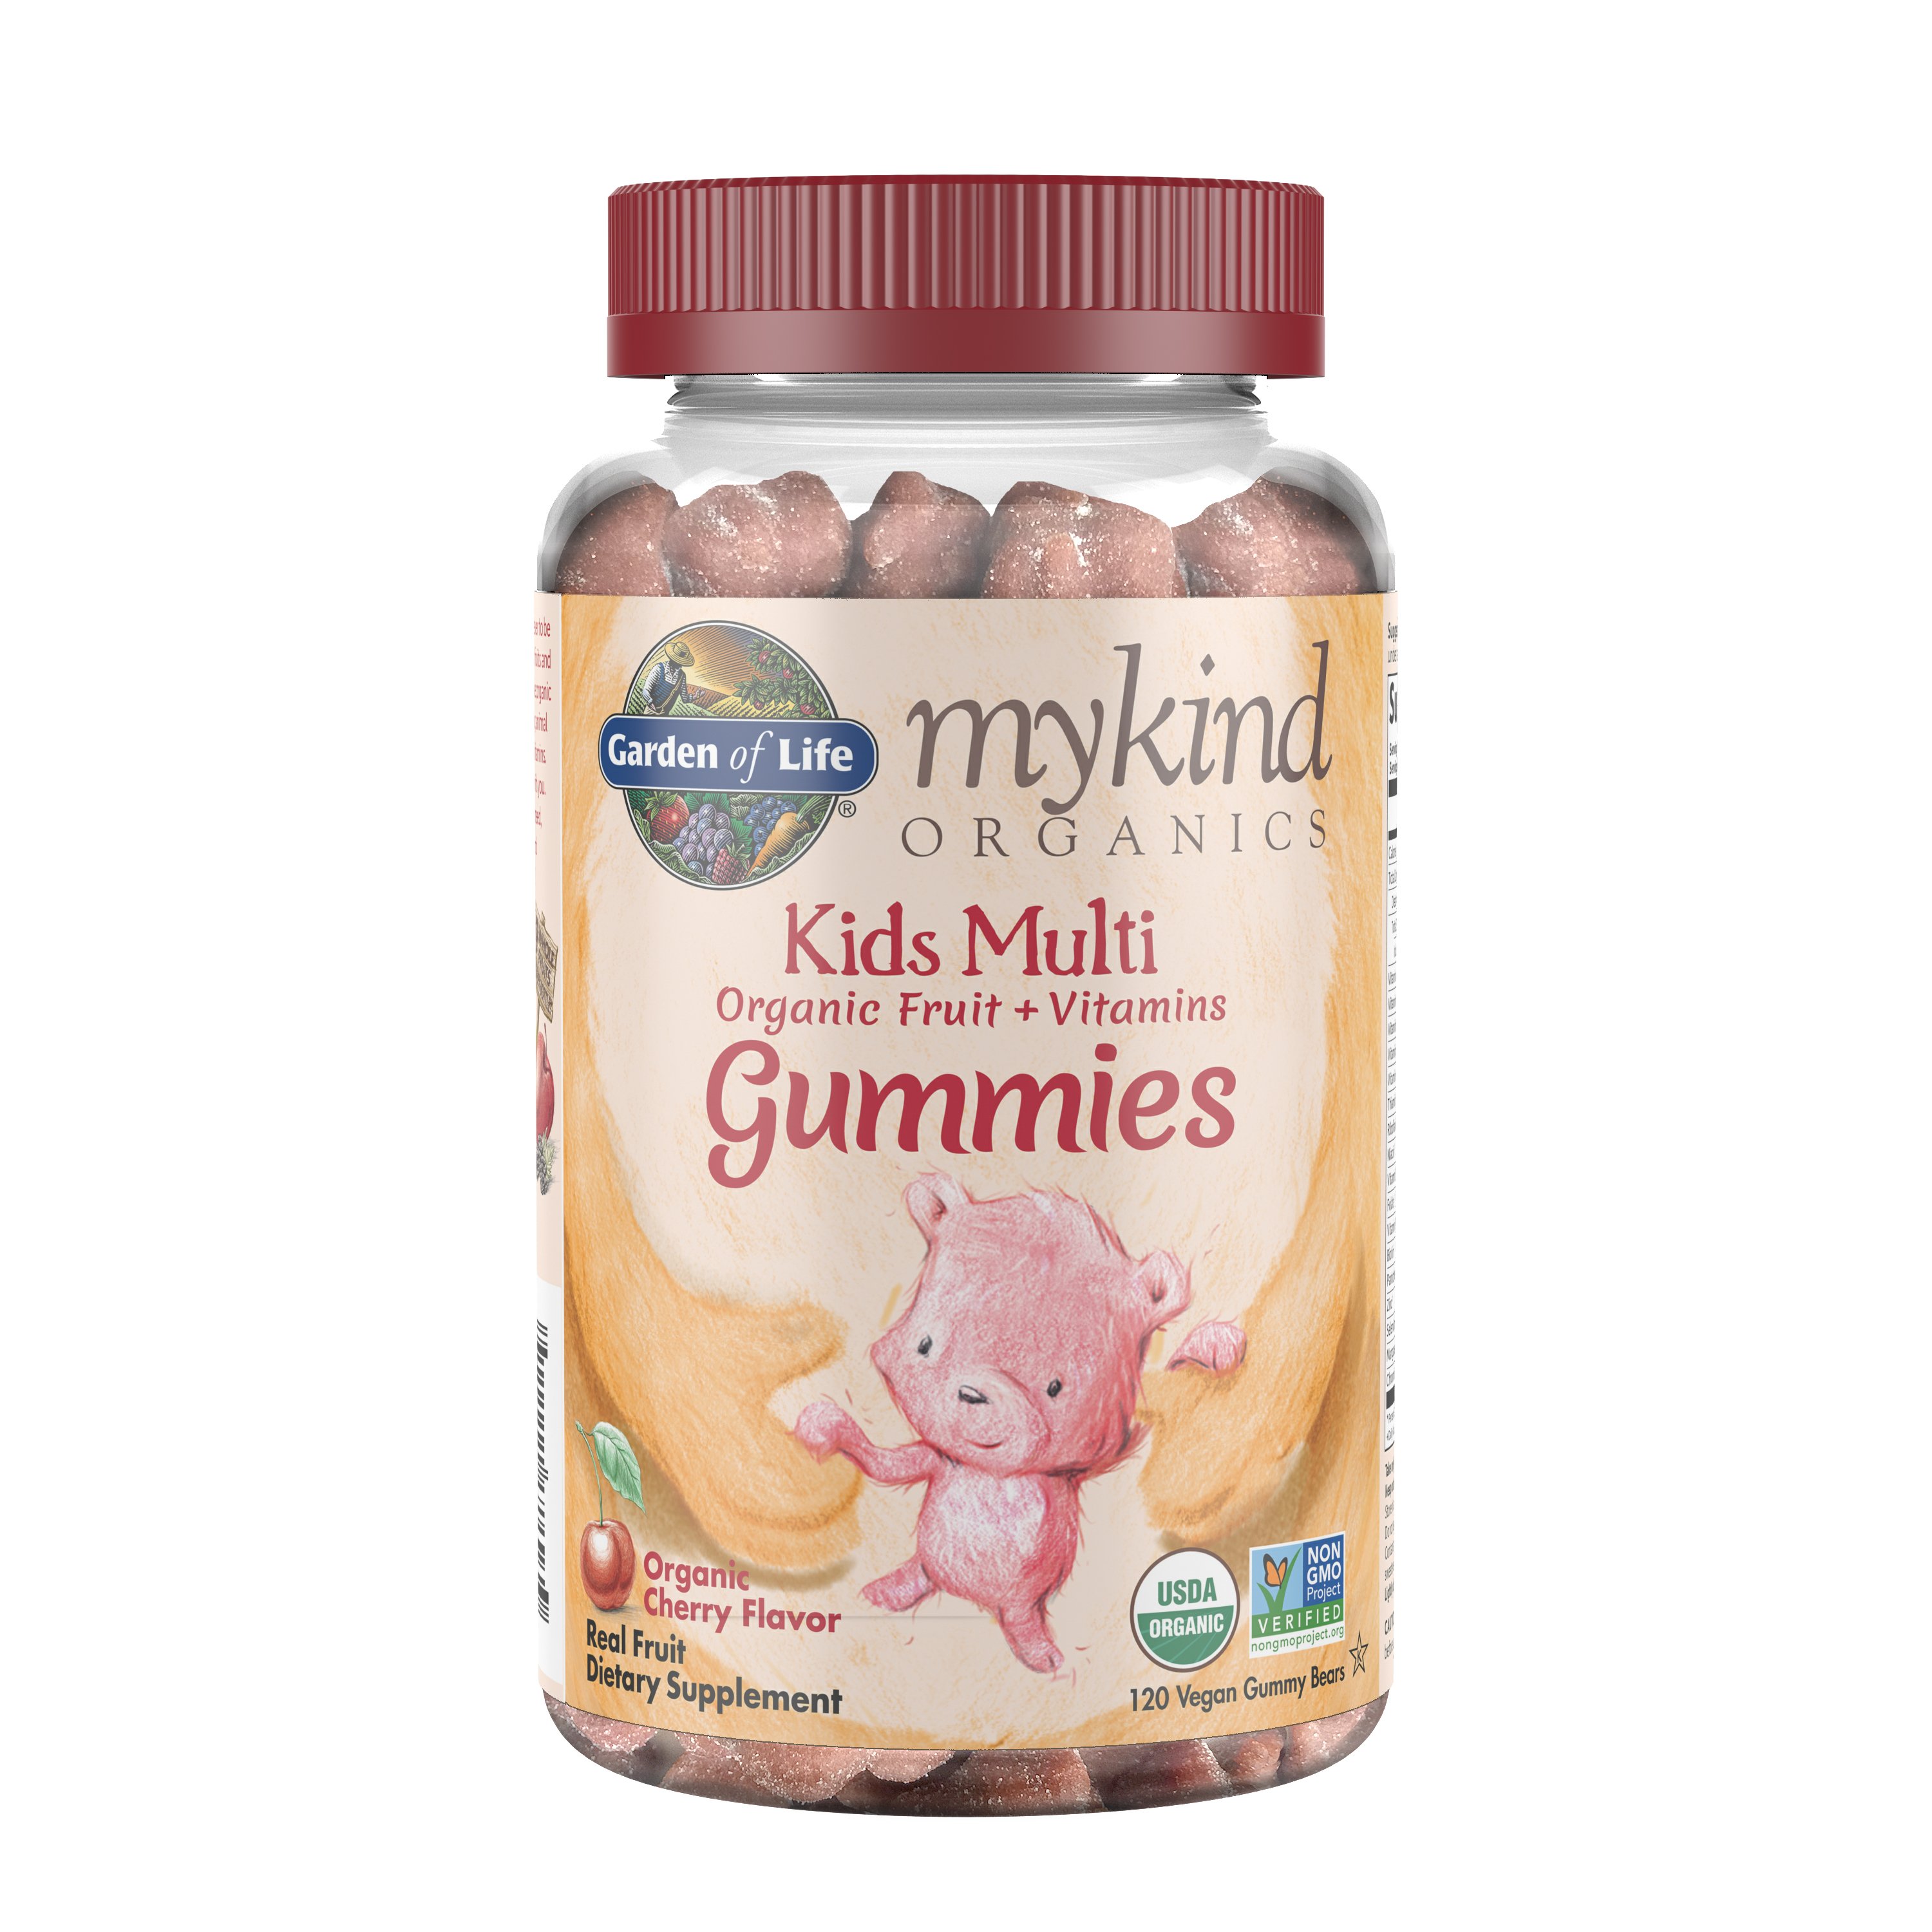 Garden of Life mykind Organics Kids Multivitamin Gummies Cherry Flavor